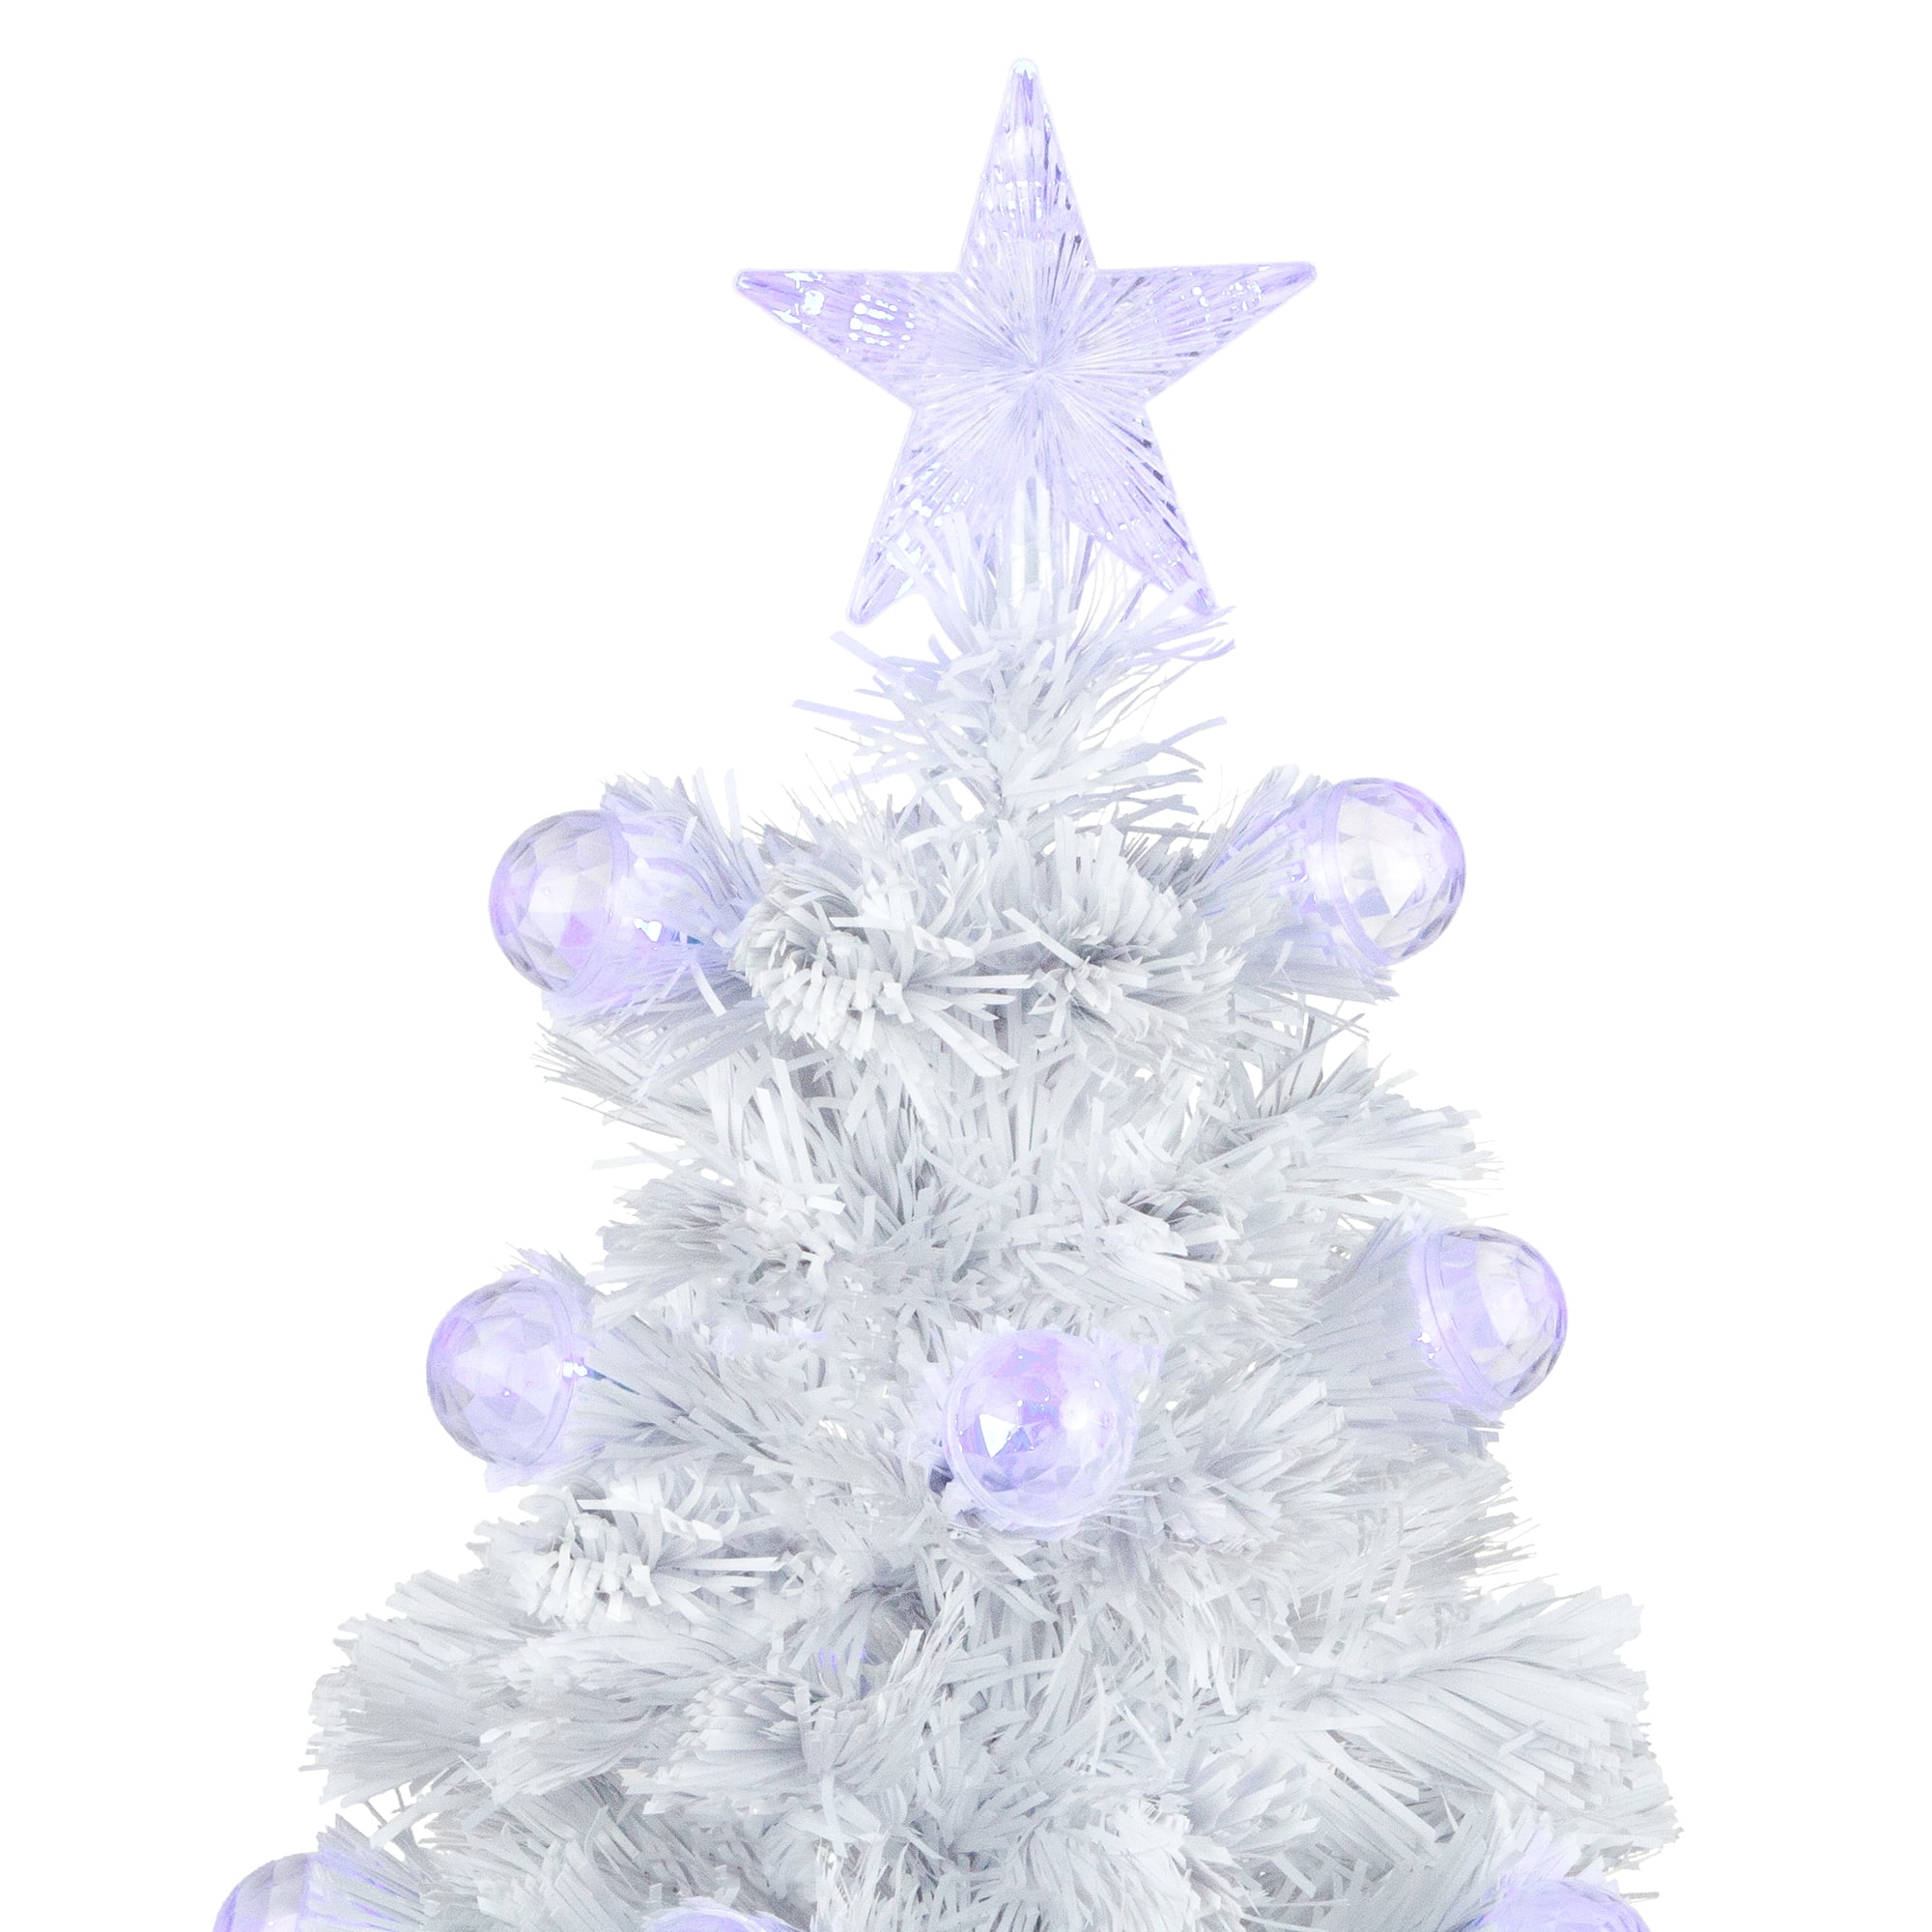 IRIDESCENT CHRISTMAS TREE / SPARKLING COLORS & FIBER OPTIC LIGHTING / NEW  in BOX